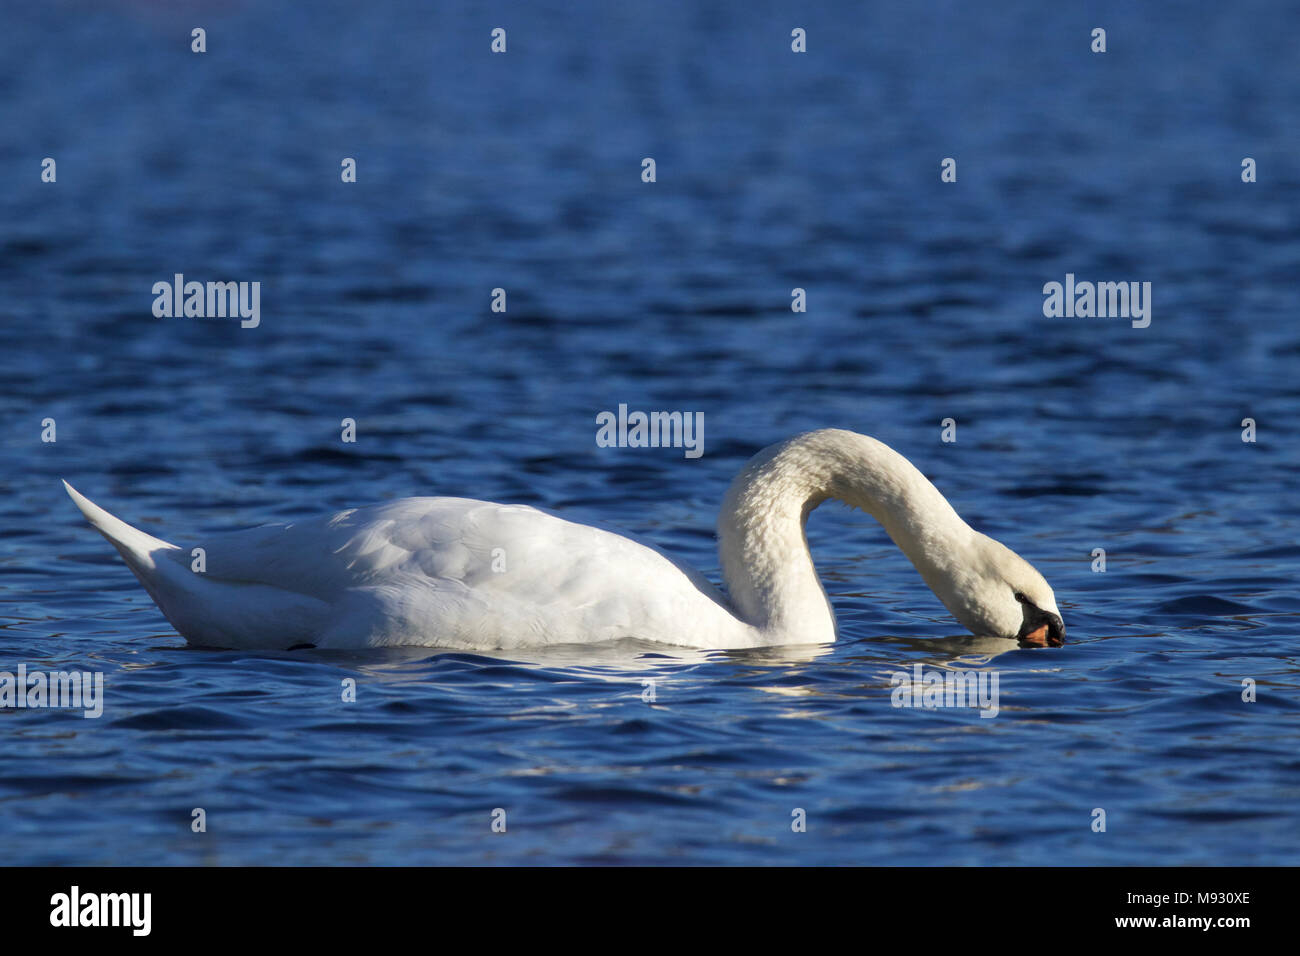 A mute swan Cygnus olor feeding on blue water Stock Photo